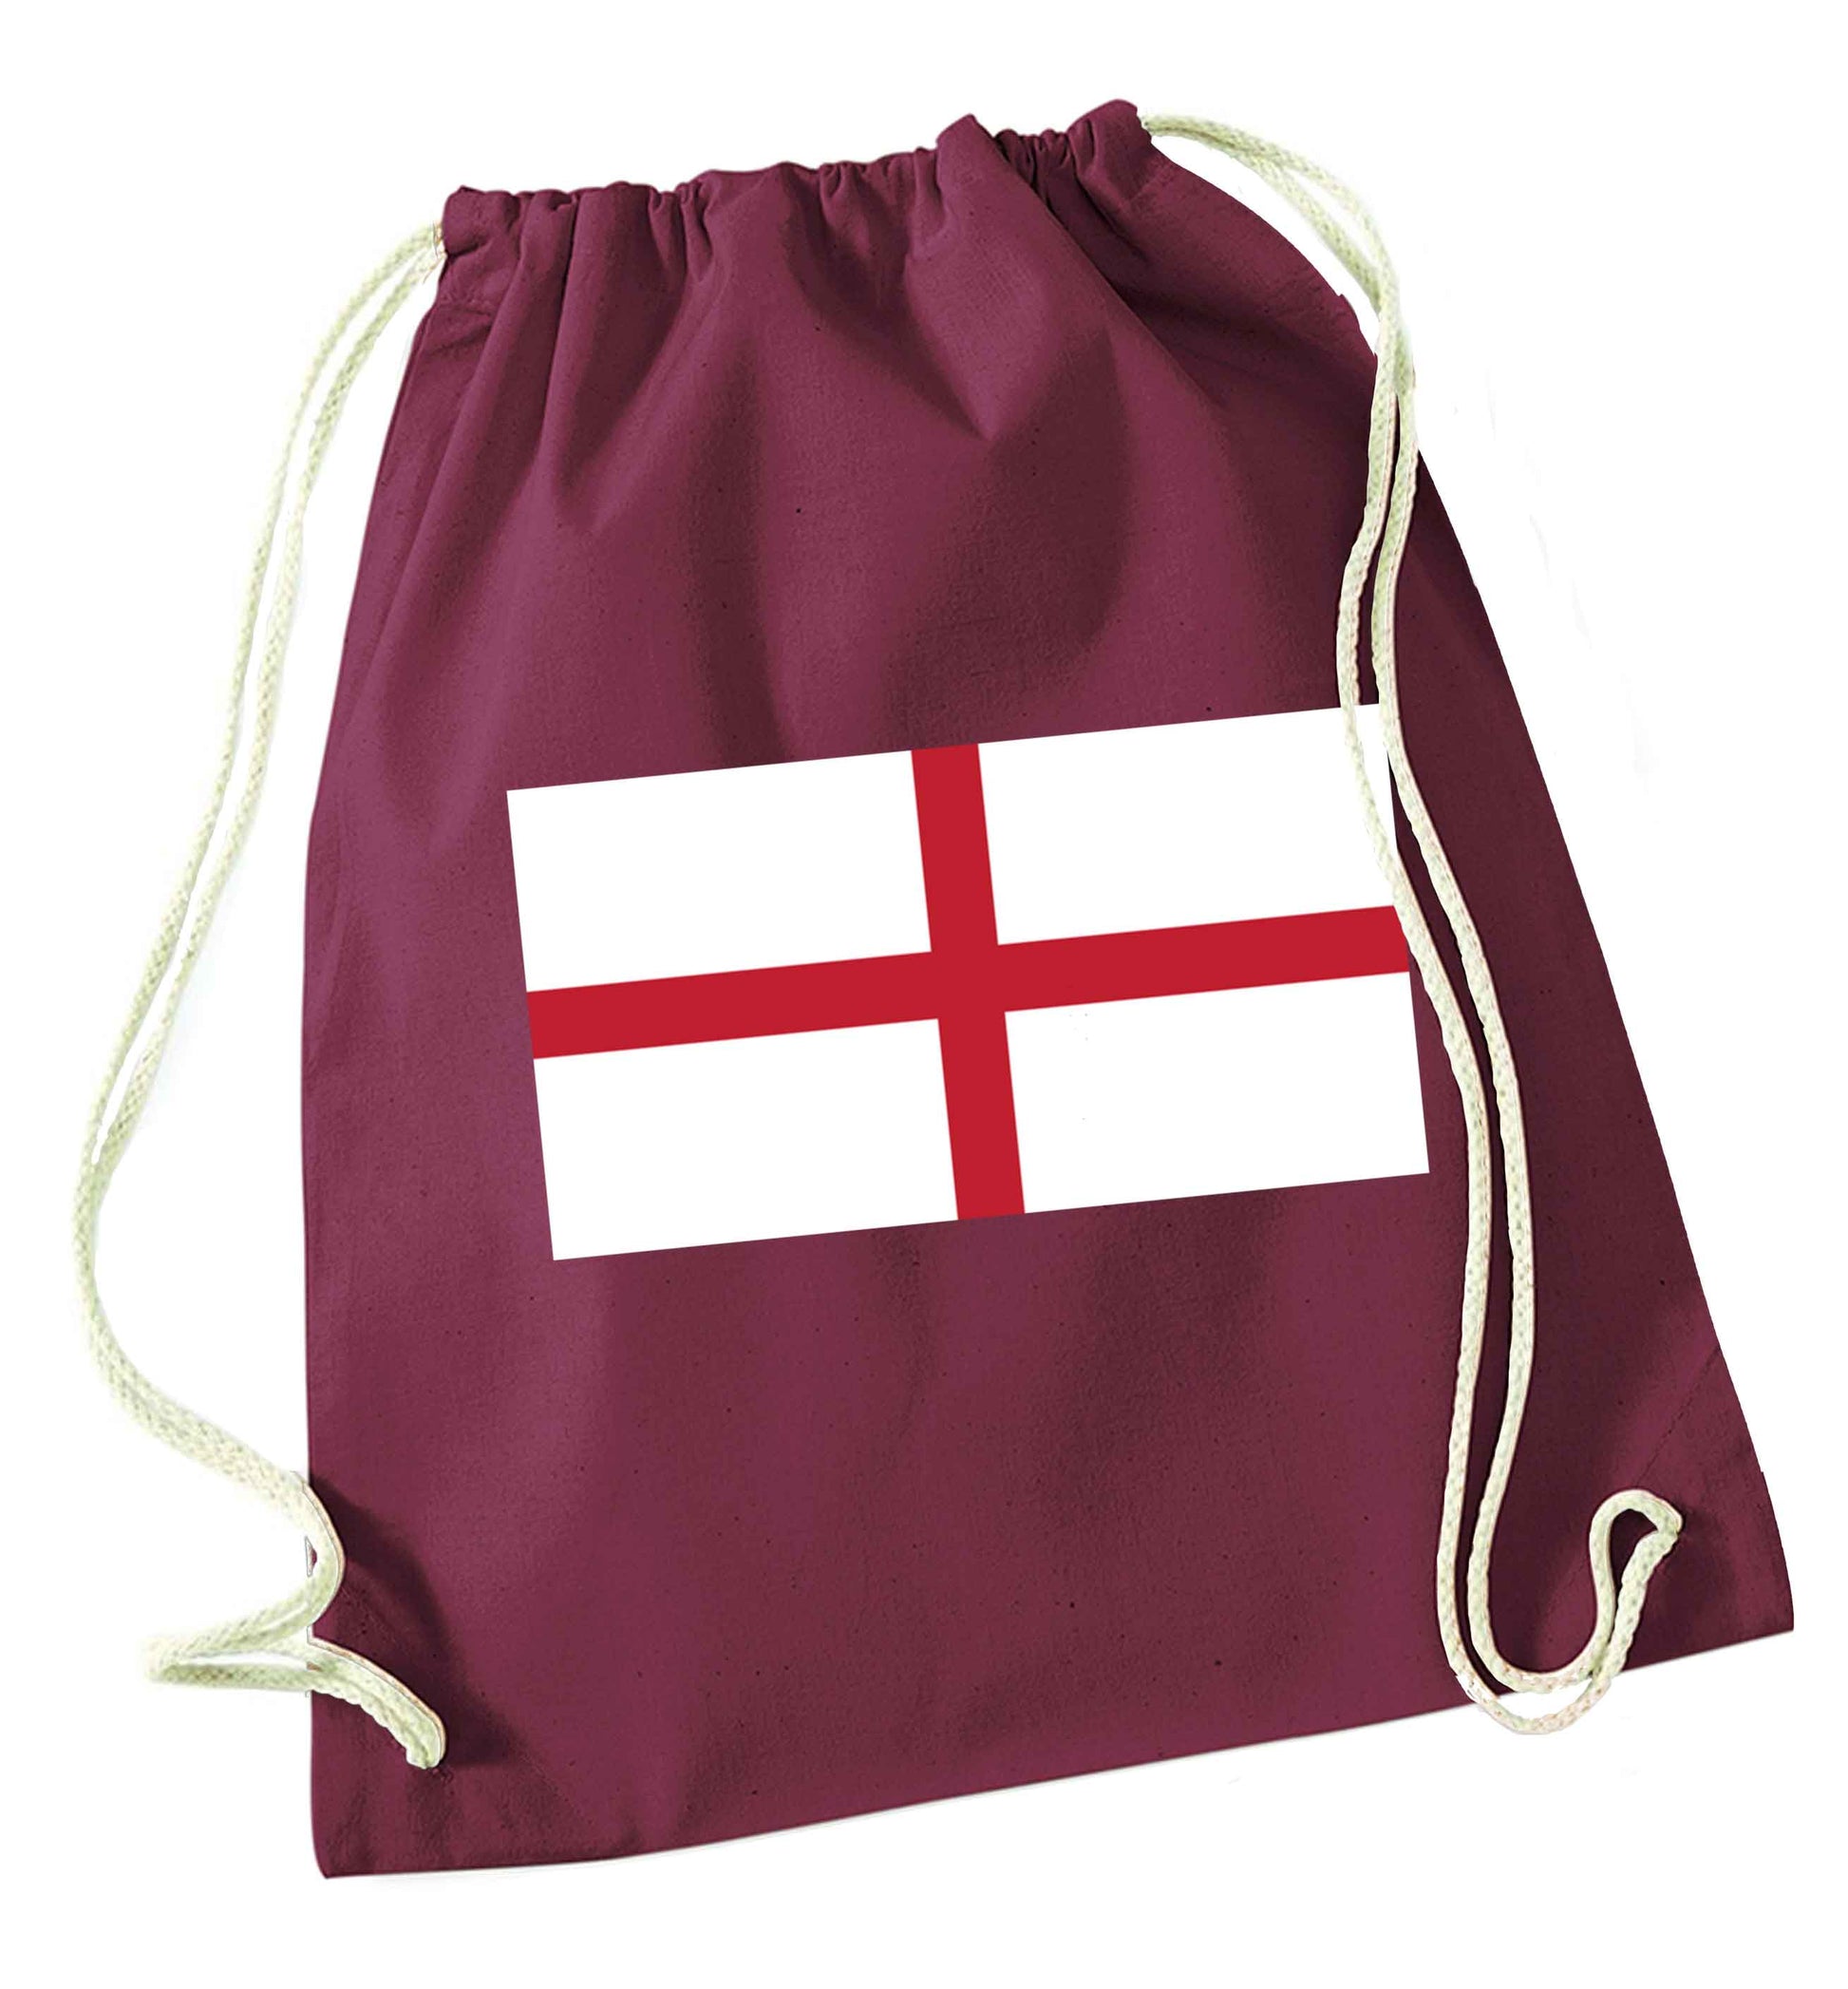 England Flag maroon drawstring bag